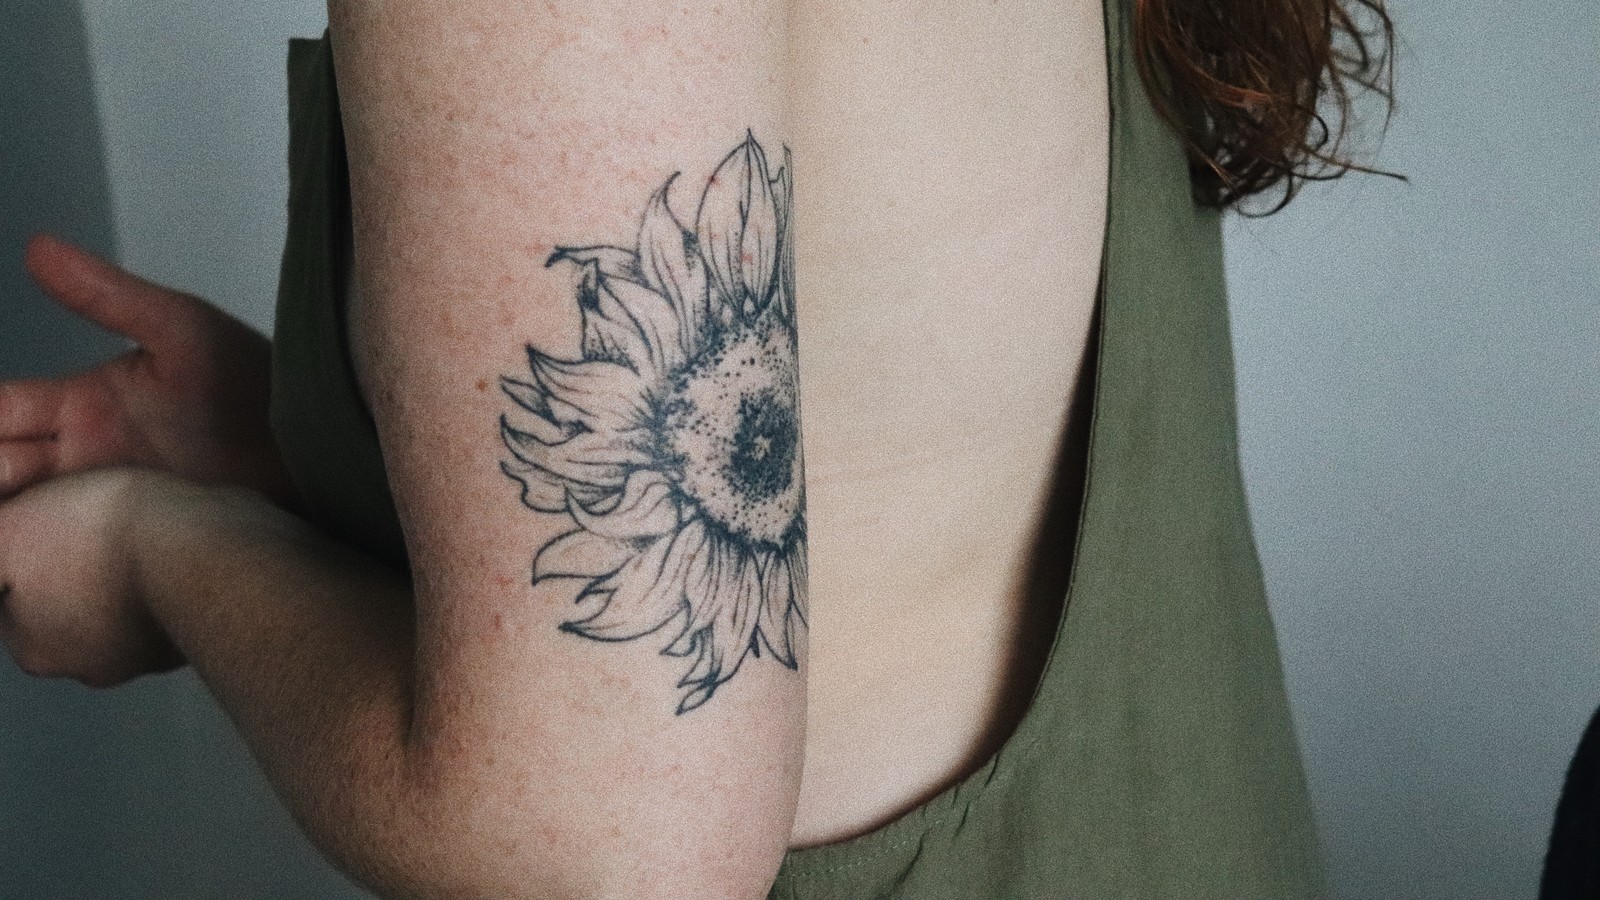 Semipermanent Tattoos: Why Millennials Love Them - The Atlantic